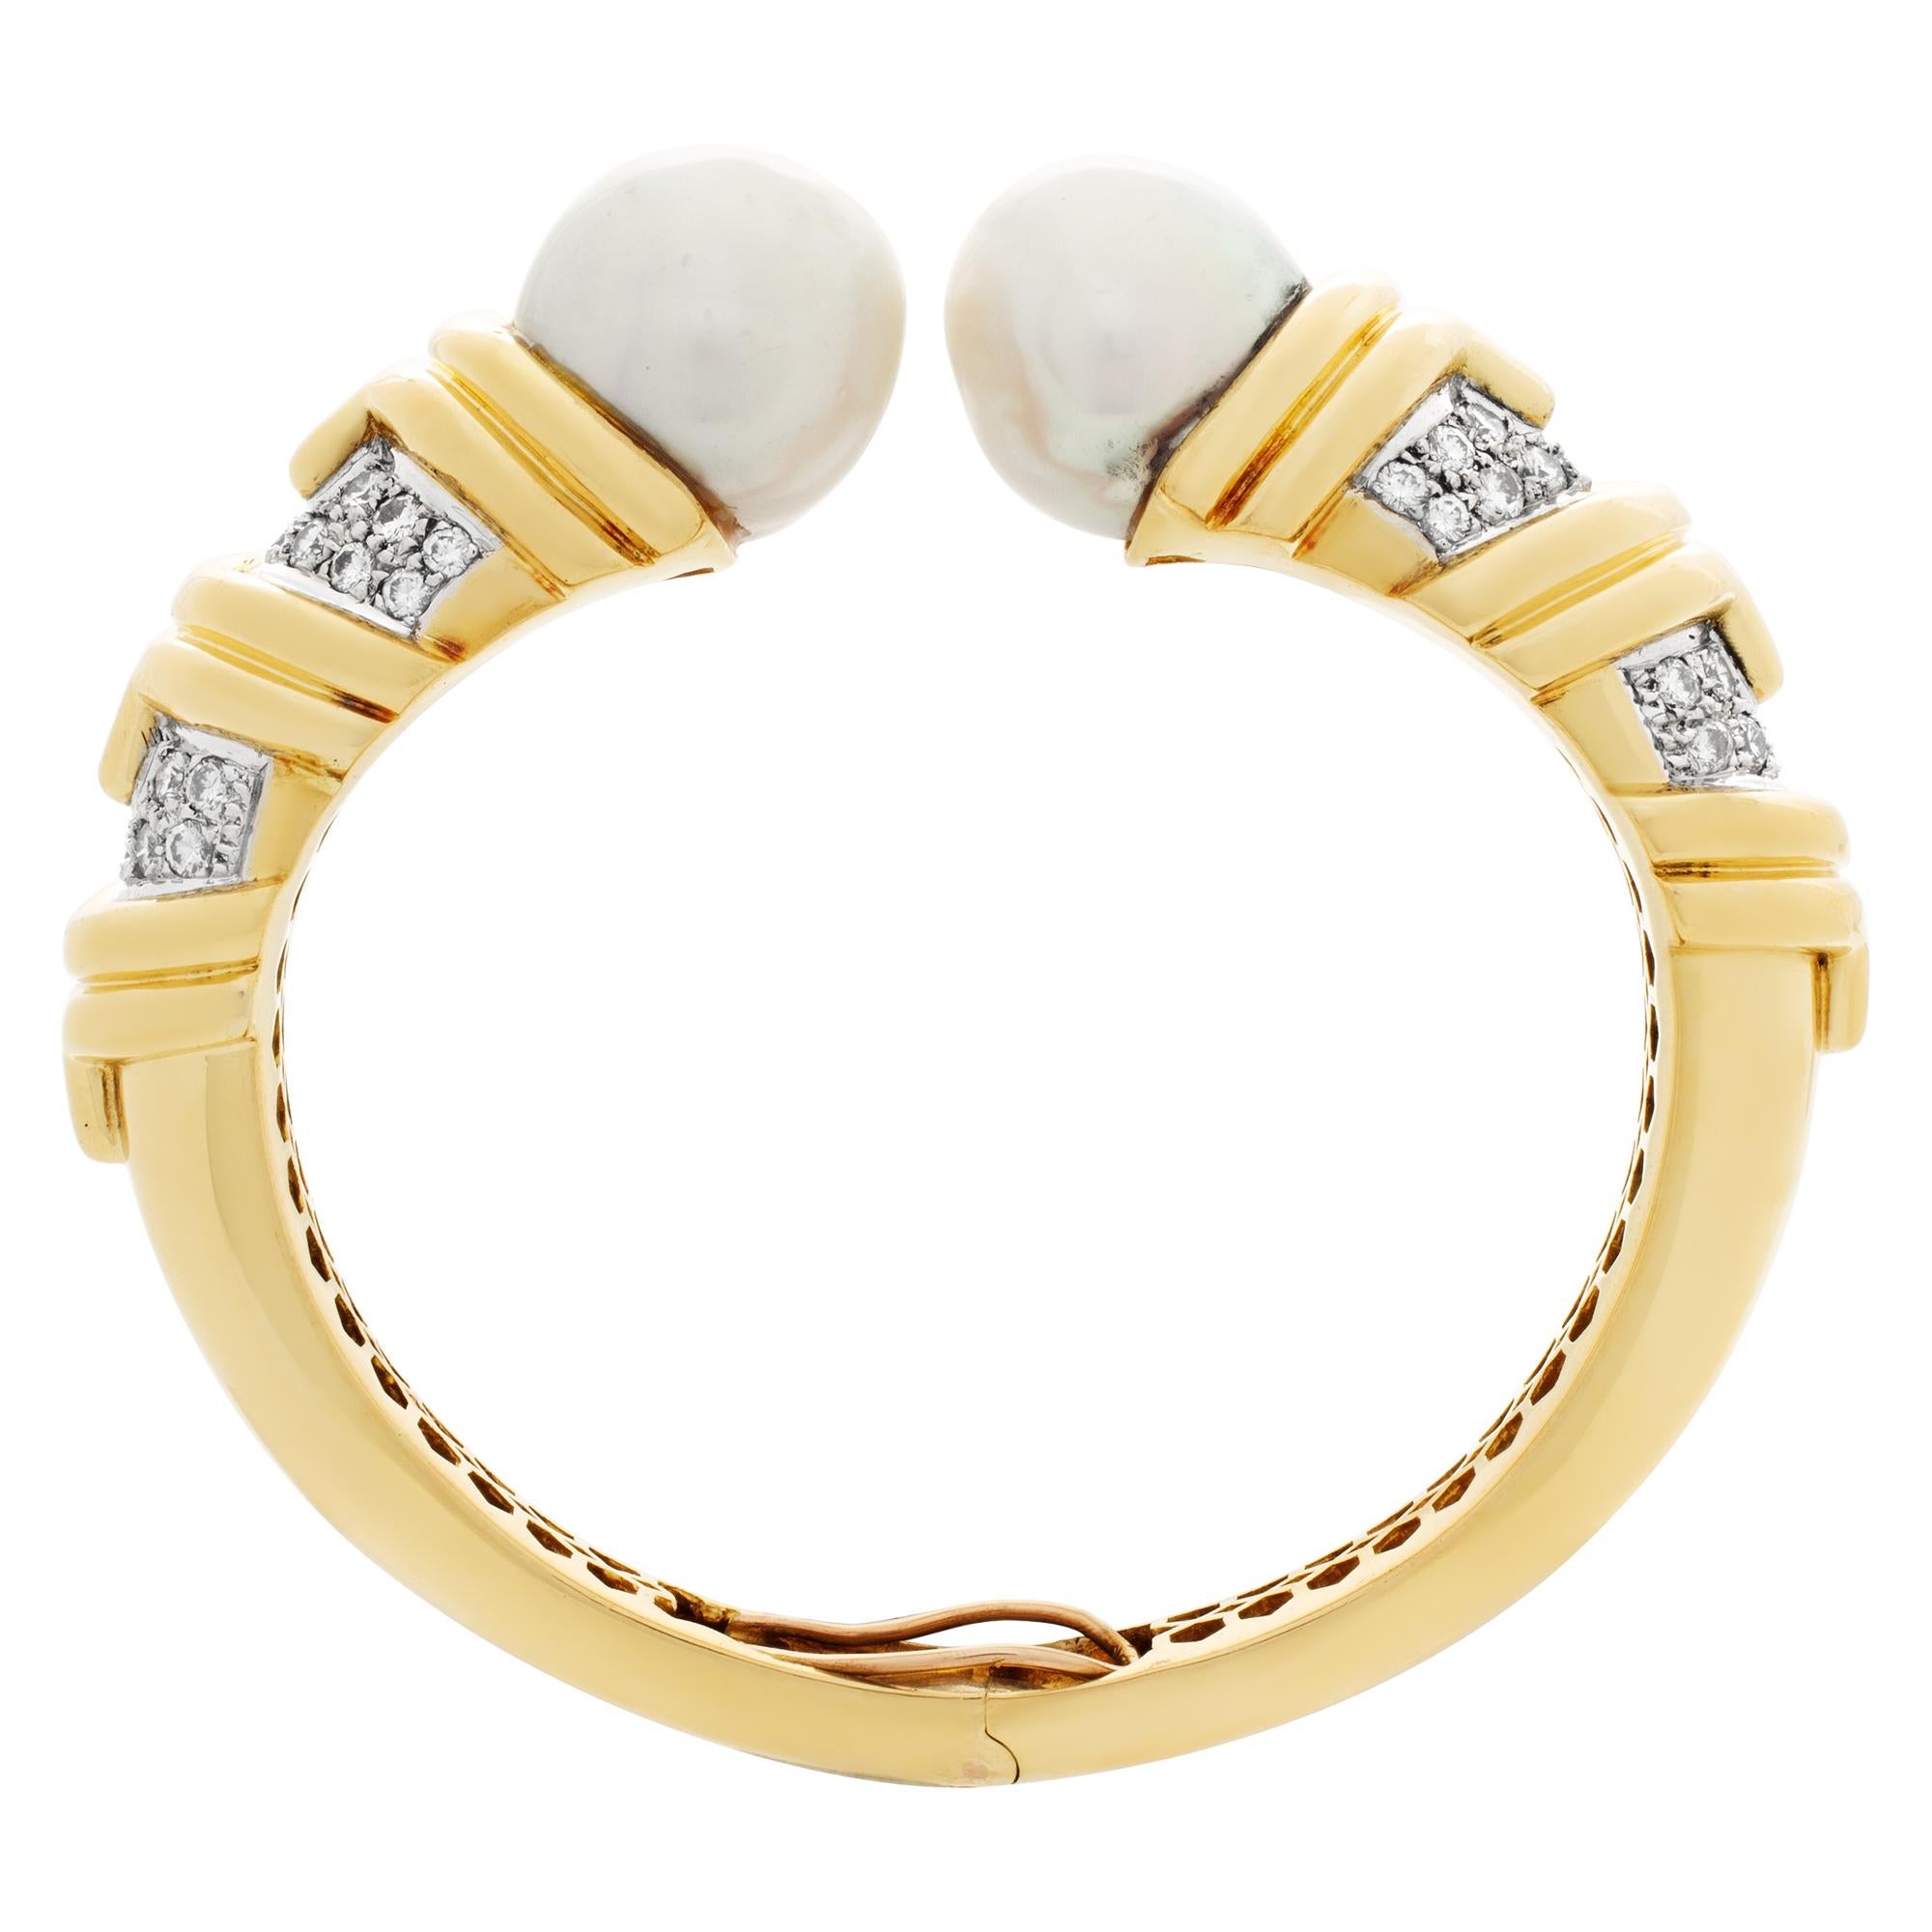 Pearl & Diamonds Hinged Bangle, Set in 18K Yellow & White Gold 1